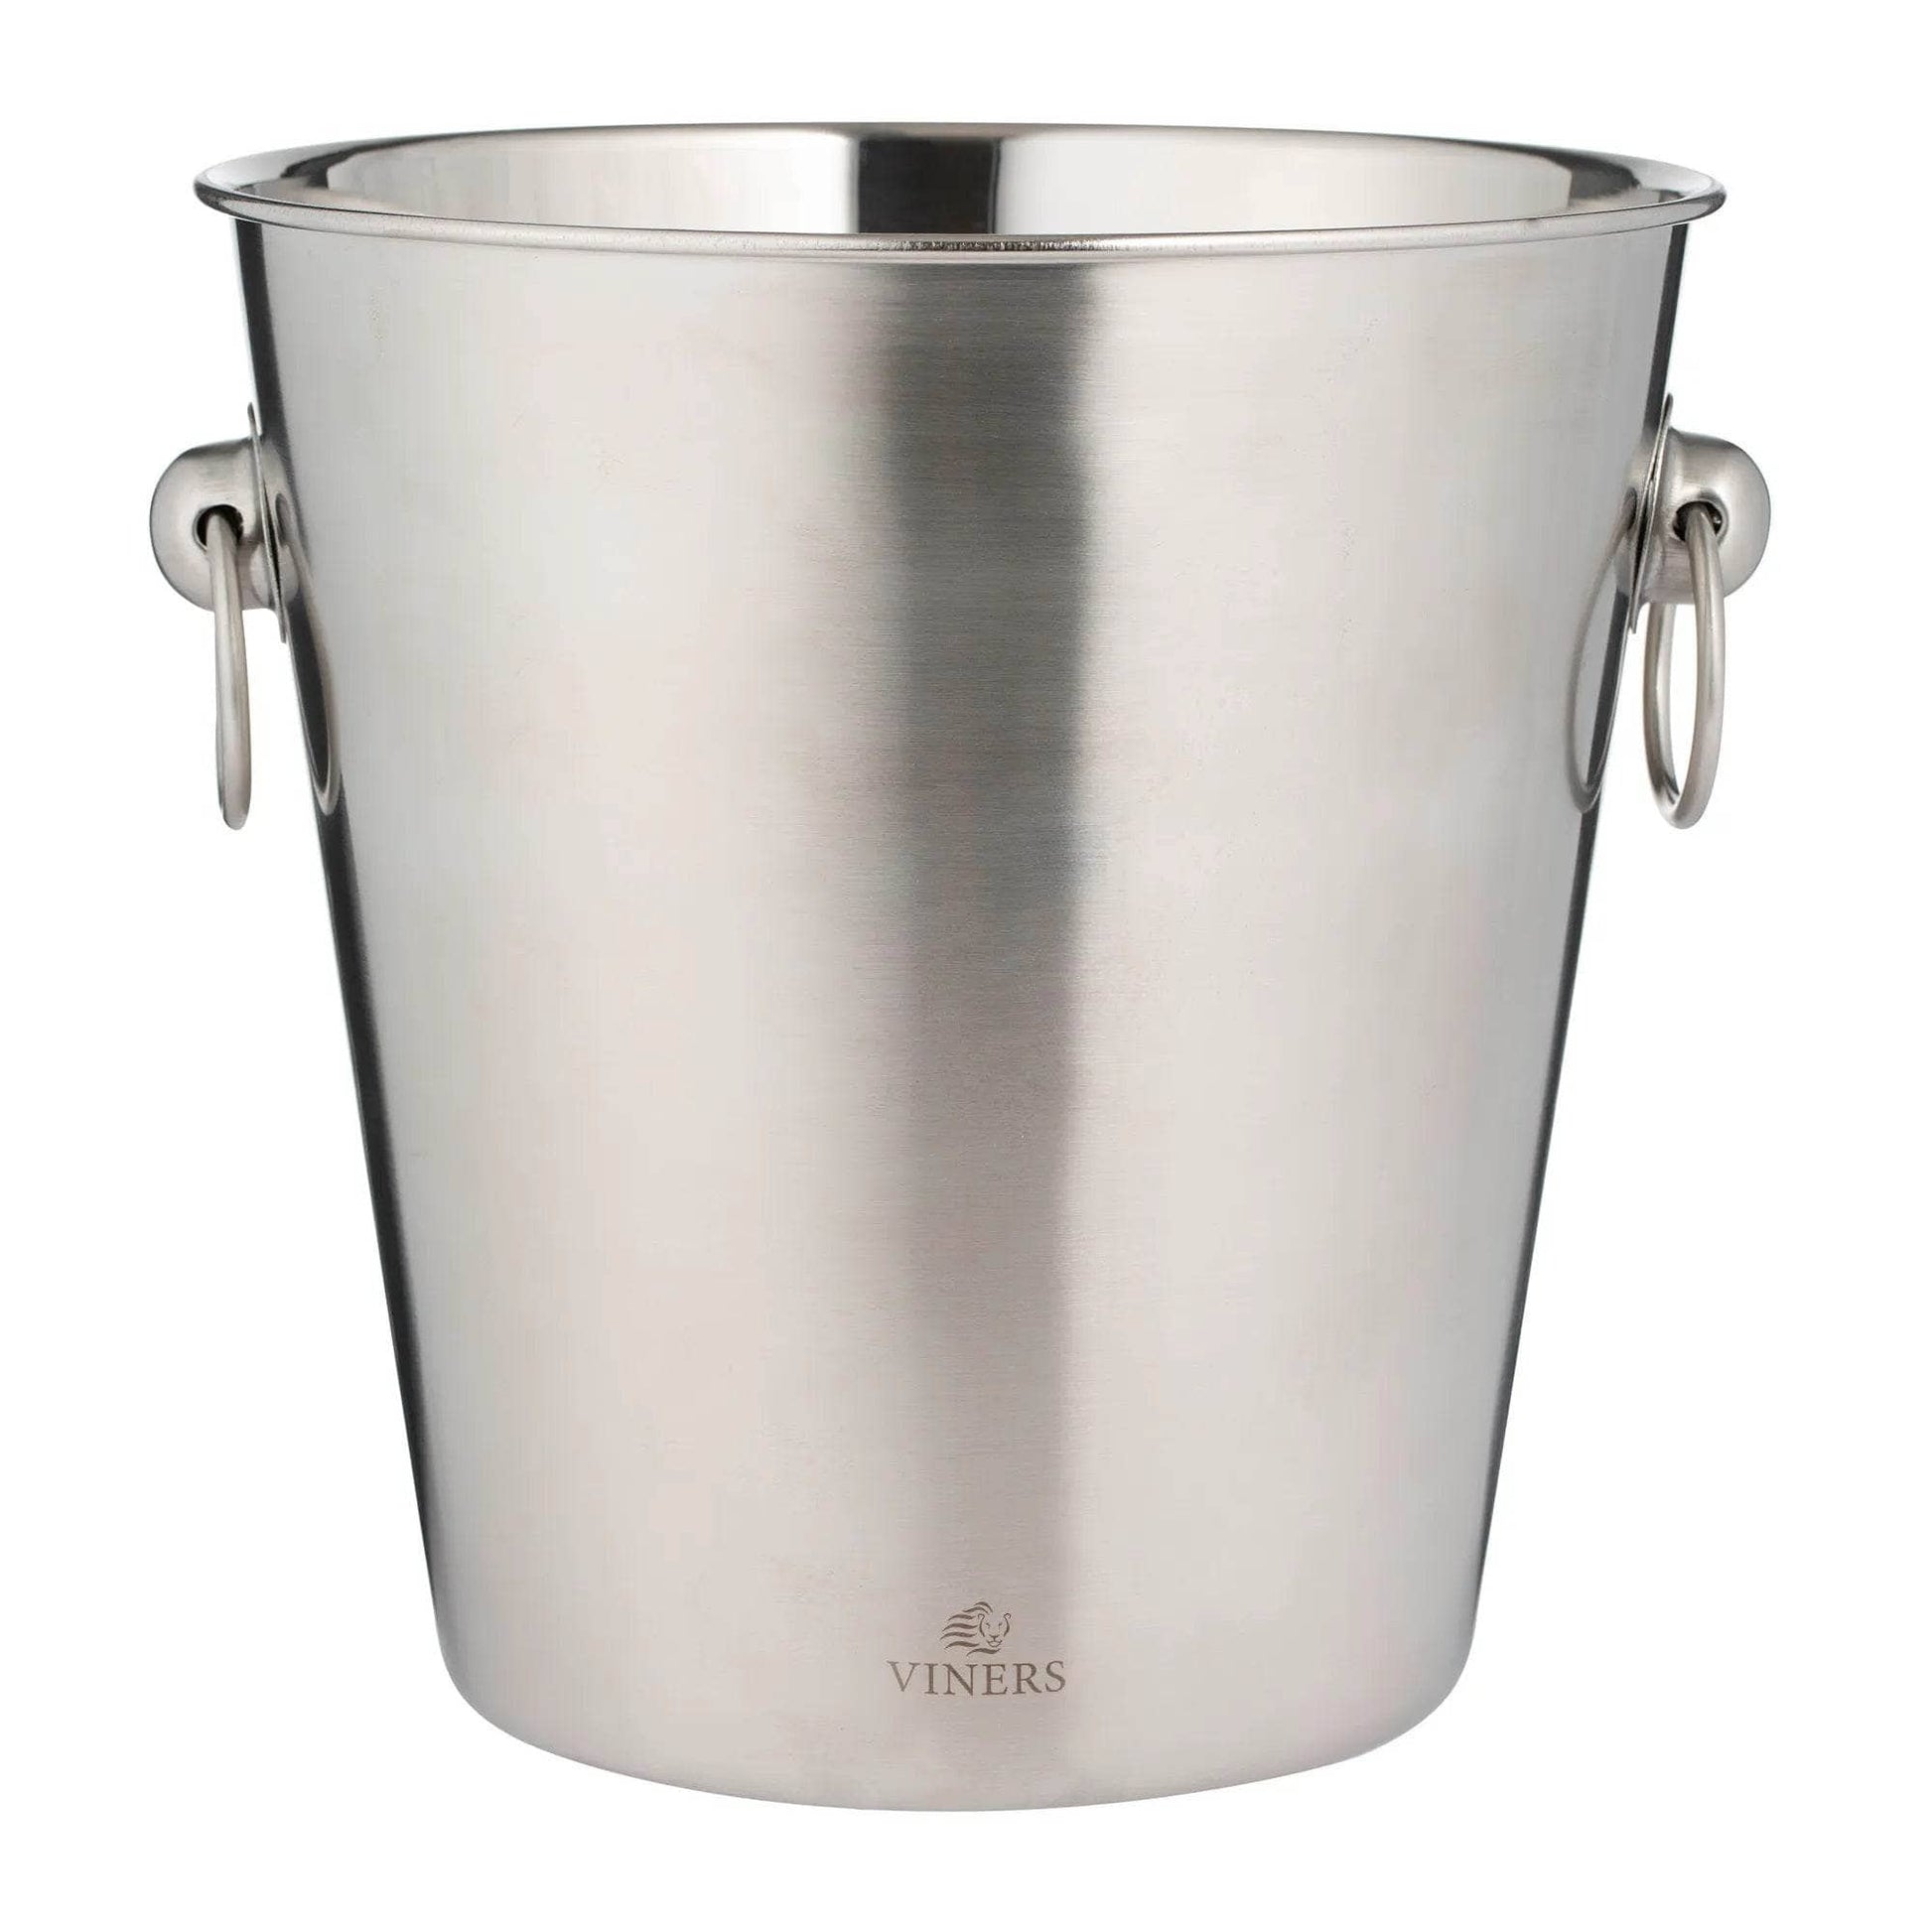 Kitchenware  -  Stainless Steel Champagne Bucket 4L  -  60001524